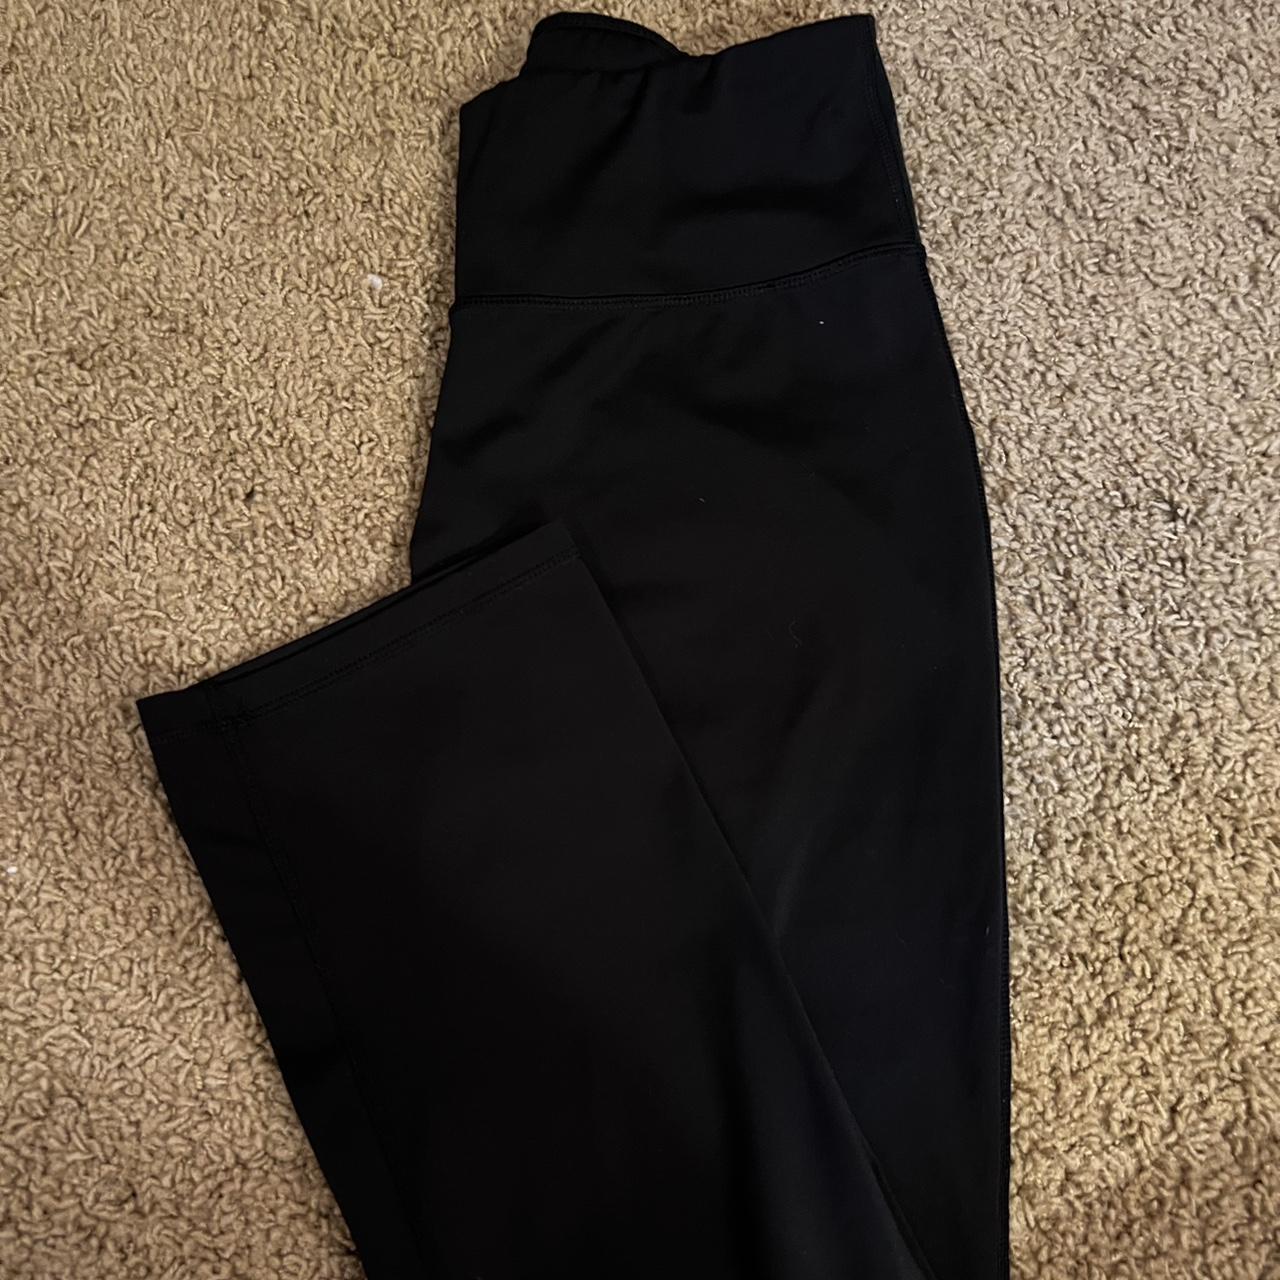 Plain black leggings size large - Depop